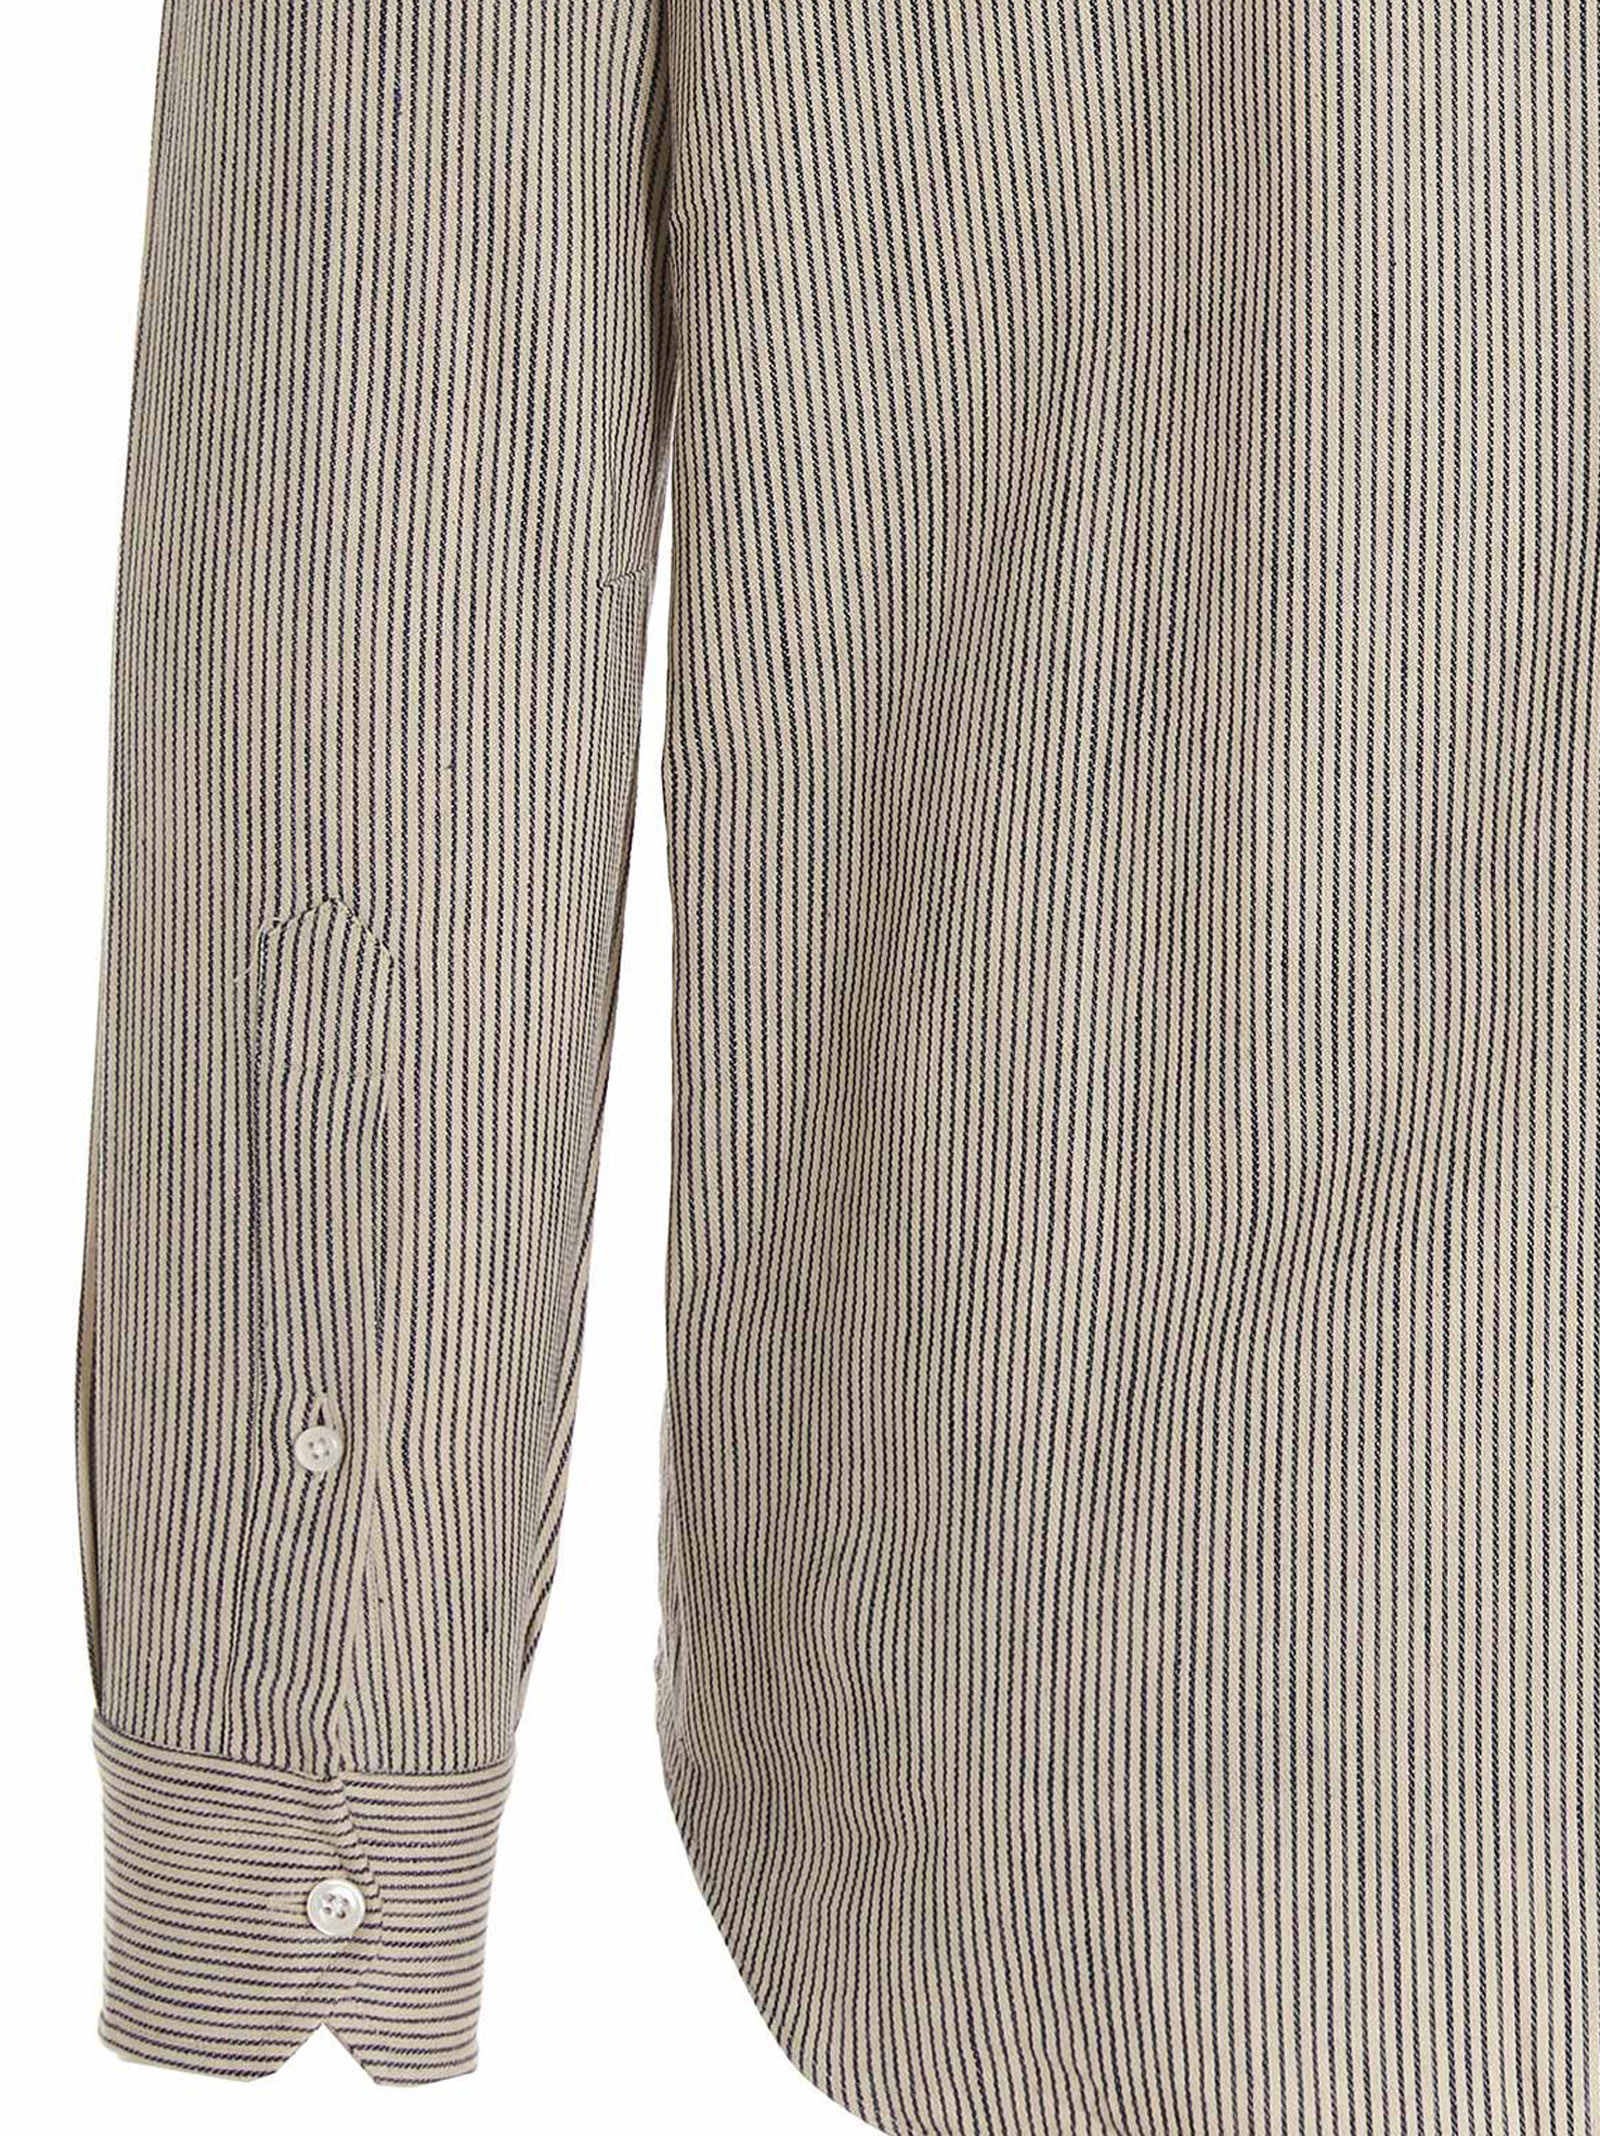 Borriello blue and white striped shirt - BORRIELLO - Vectory uomo